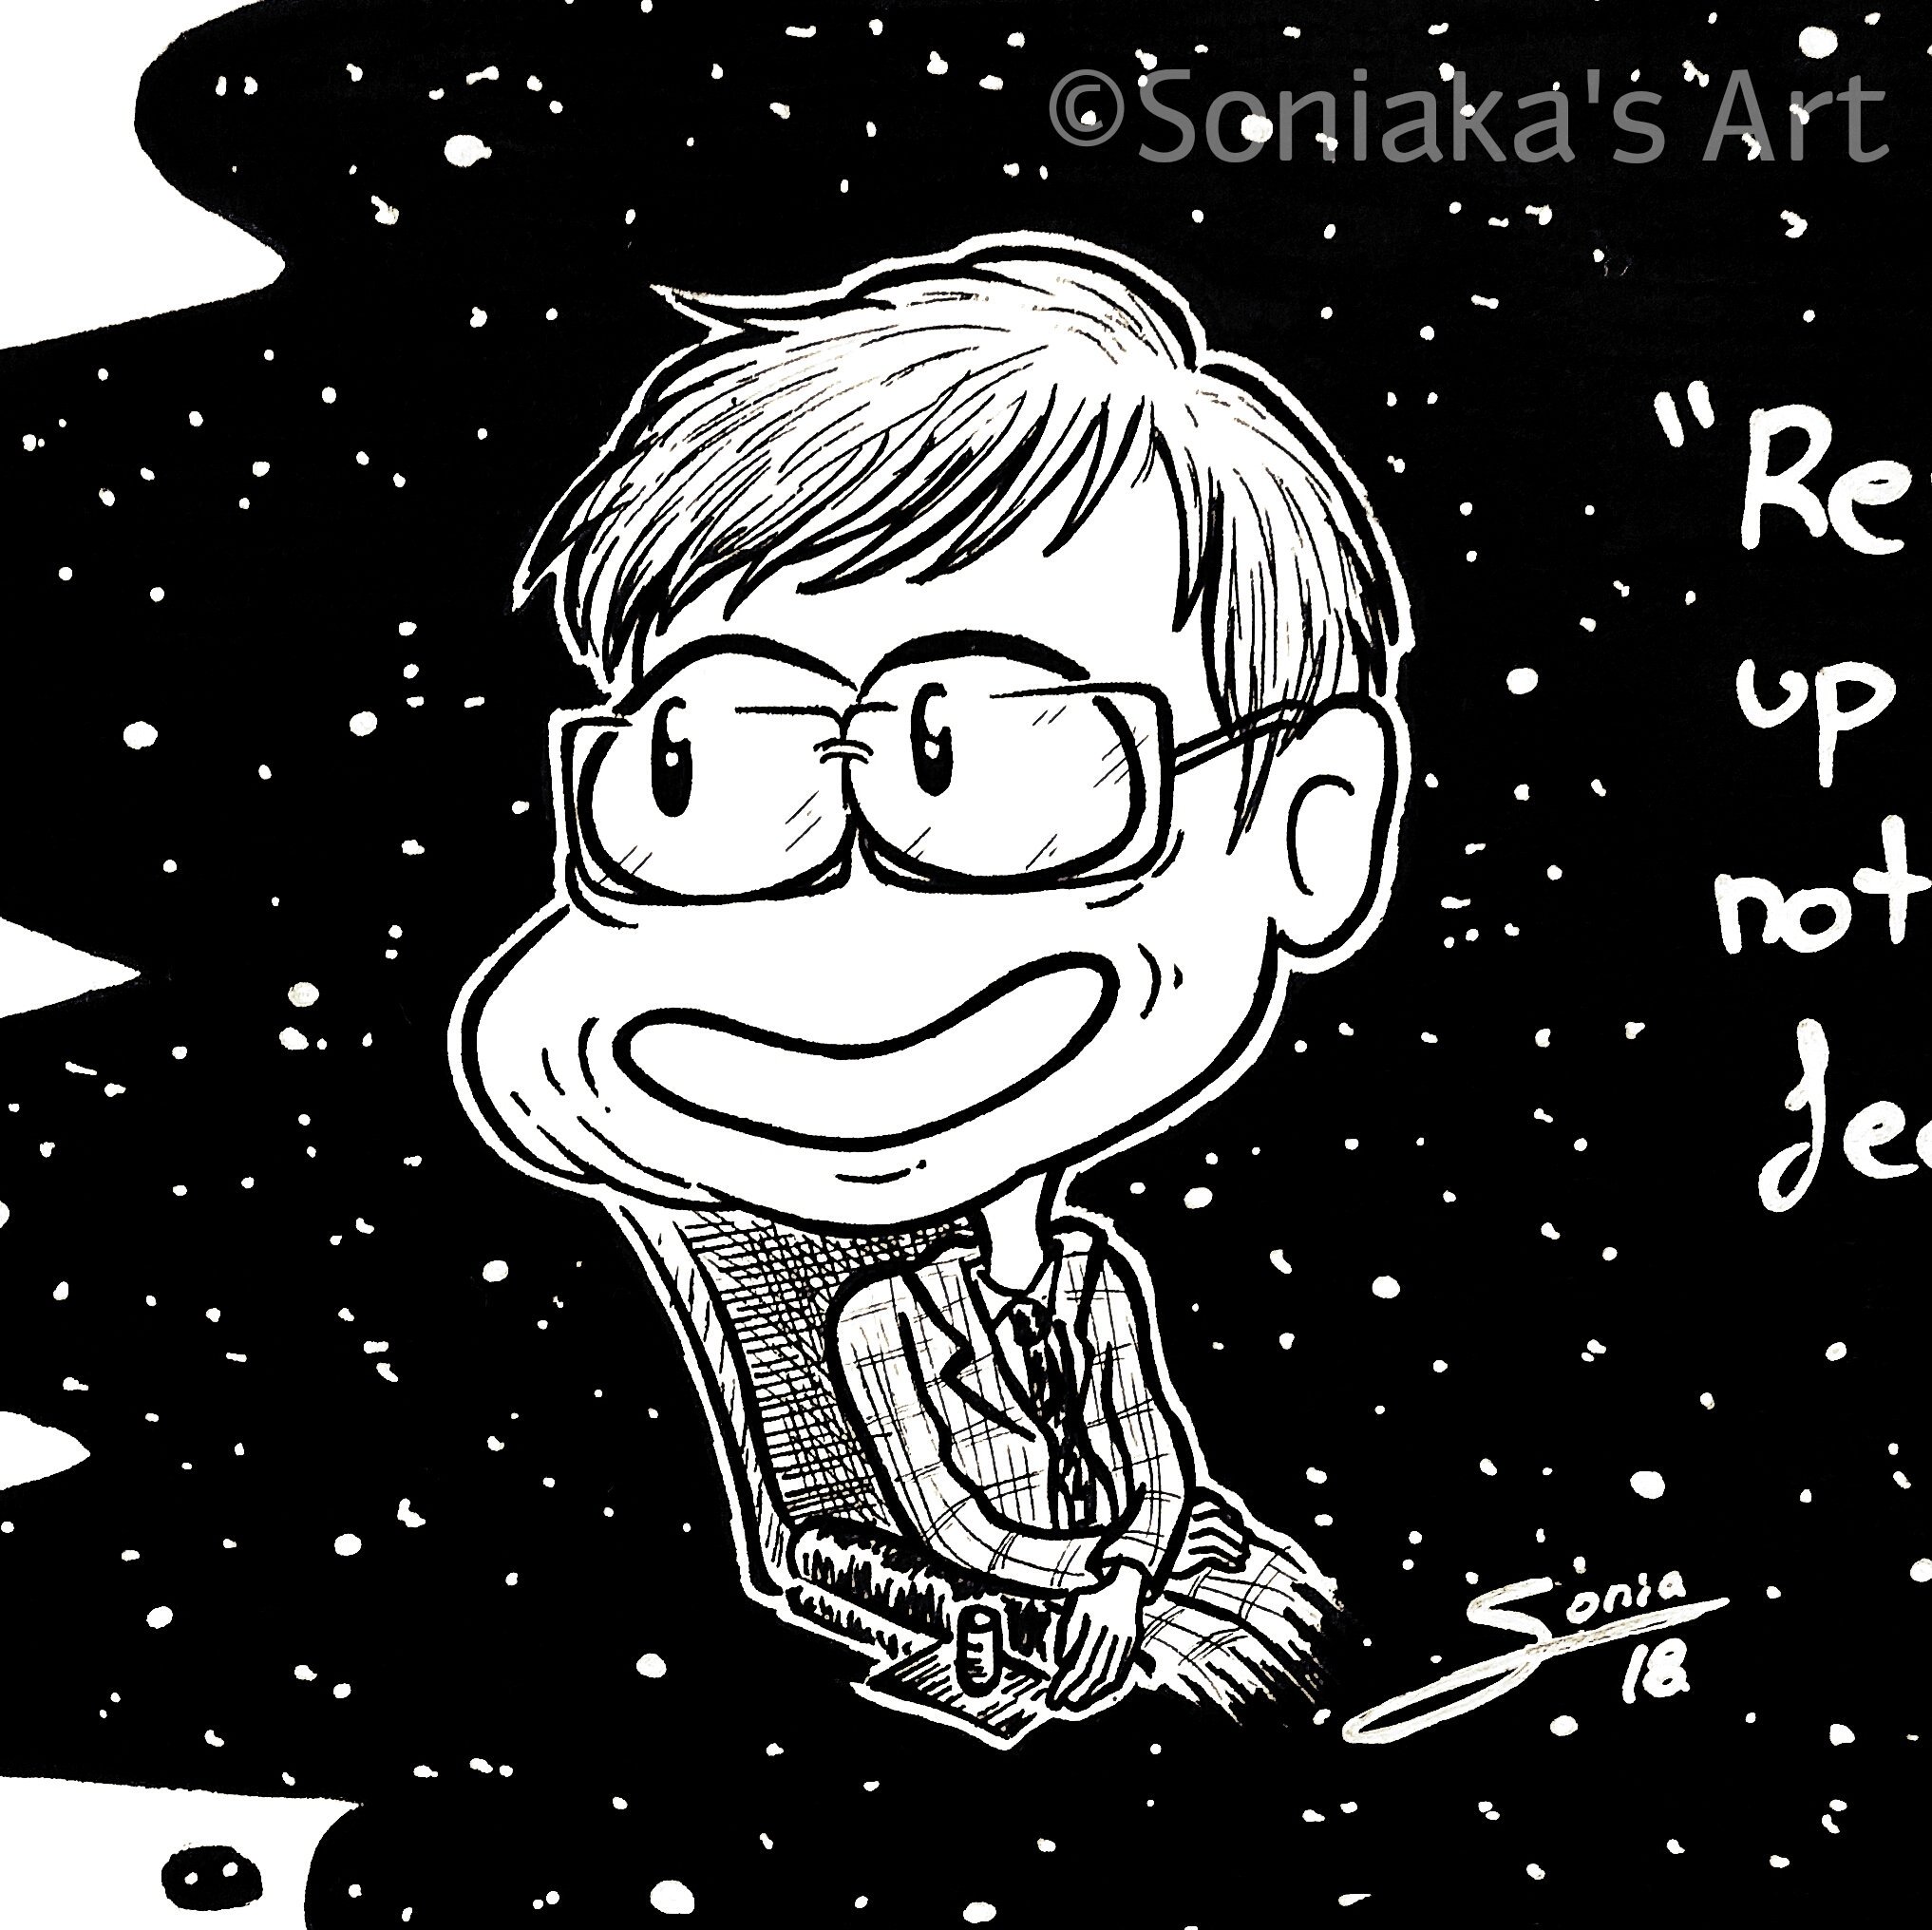 RIP Stephen Hawking by Soniaka on DeviantArt